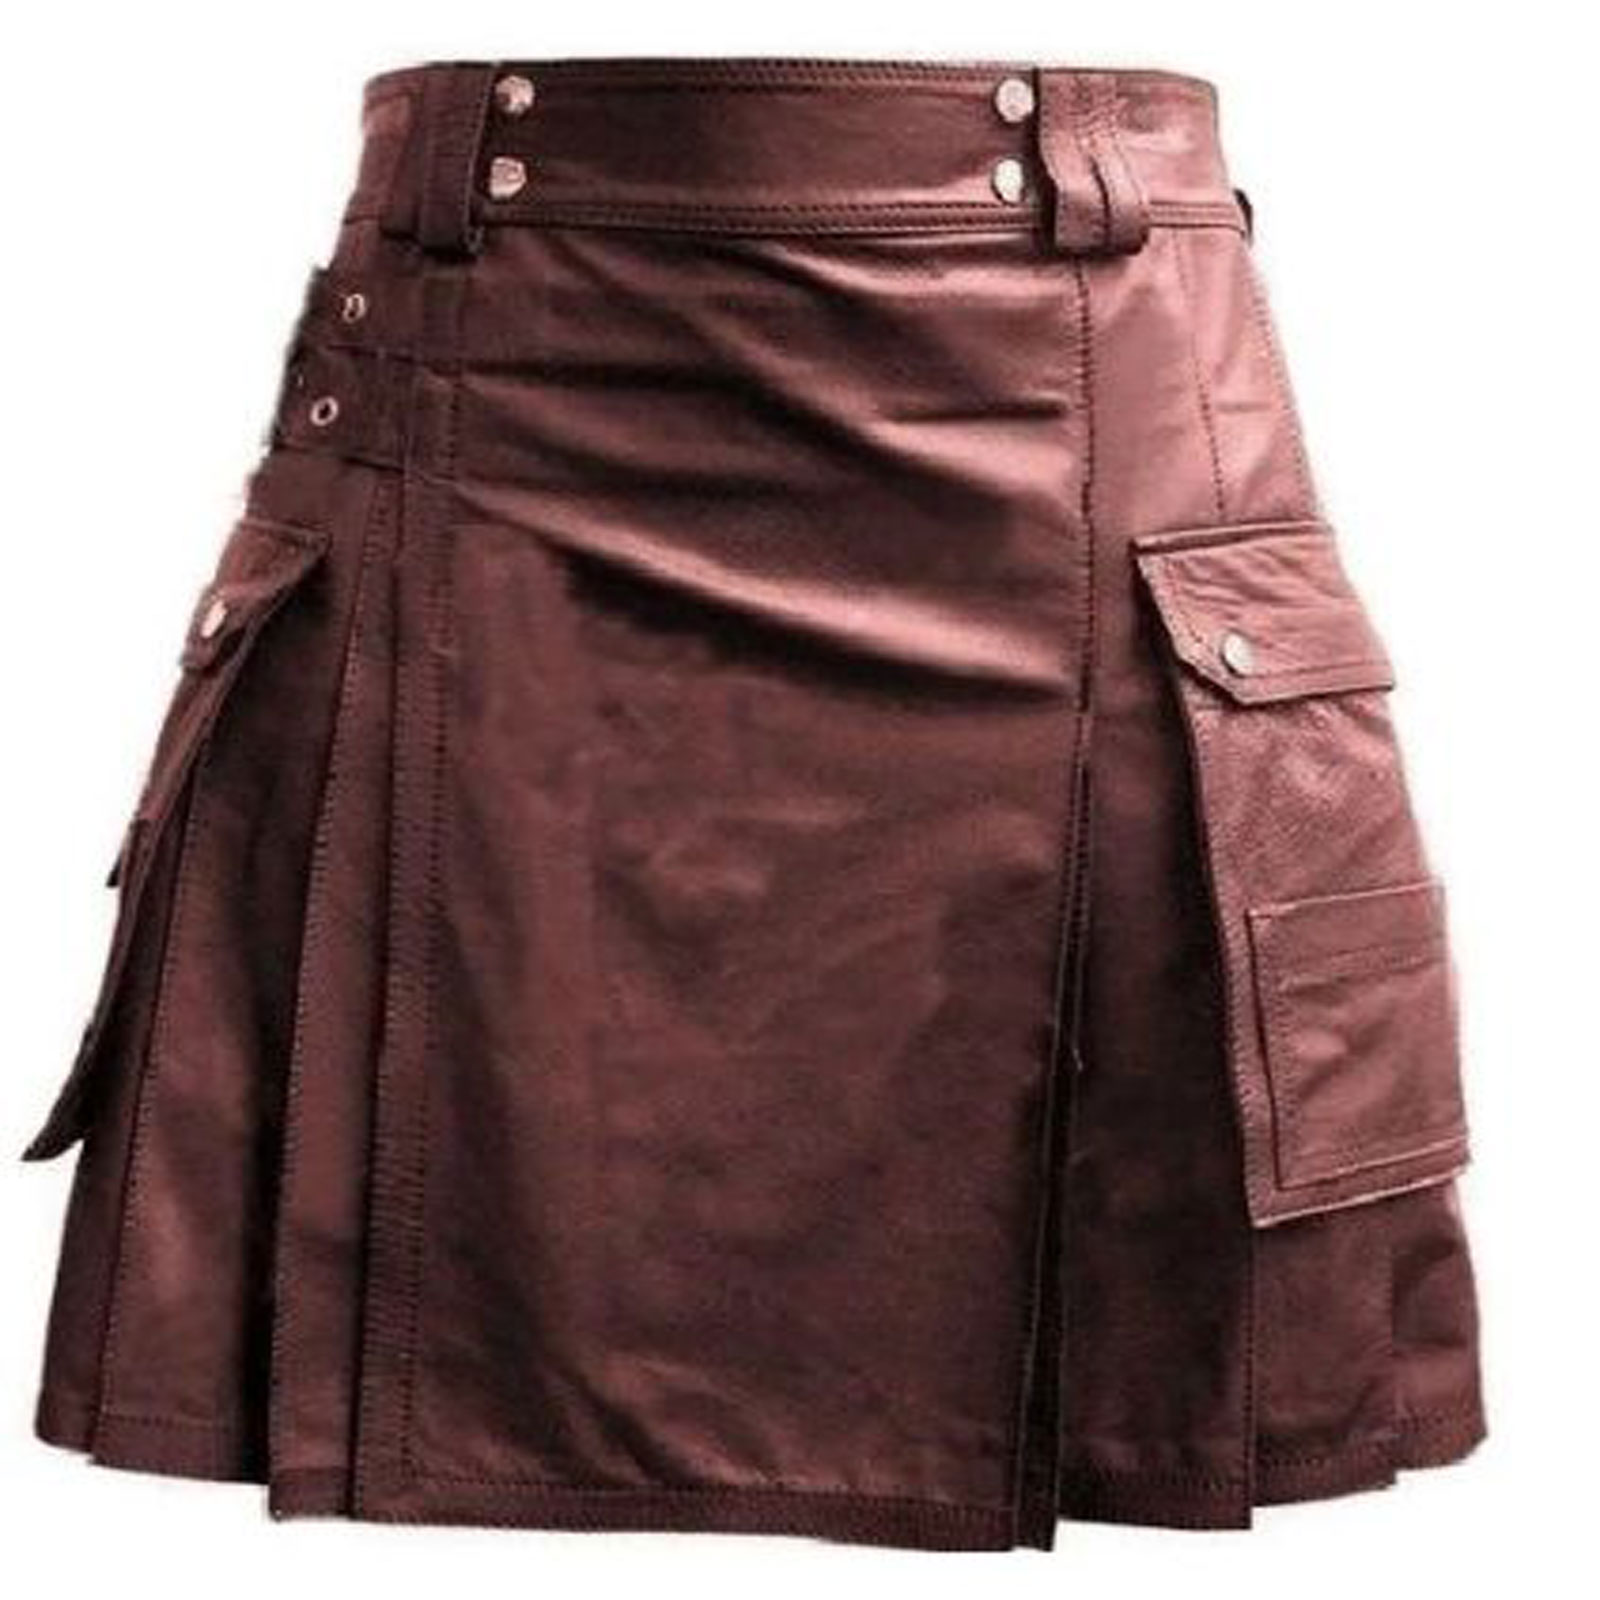 Brown Leather Utility Kilt with Cargo Pockets - Best Custom Made Kilt